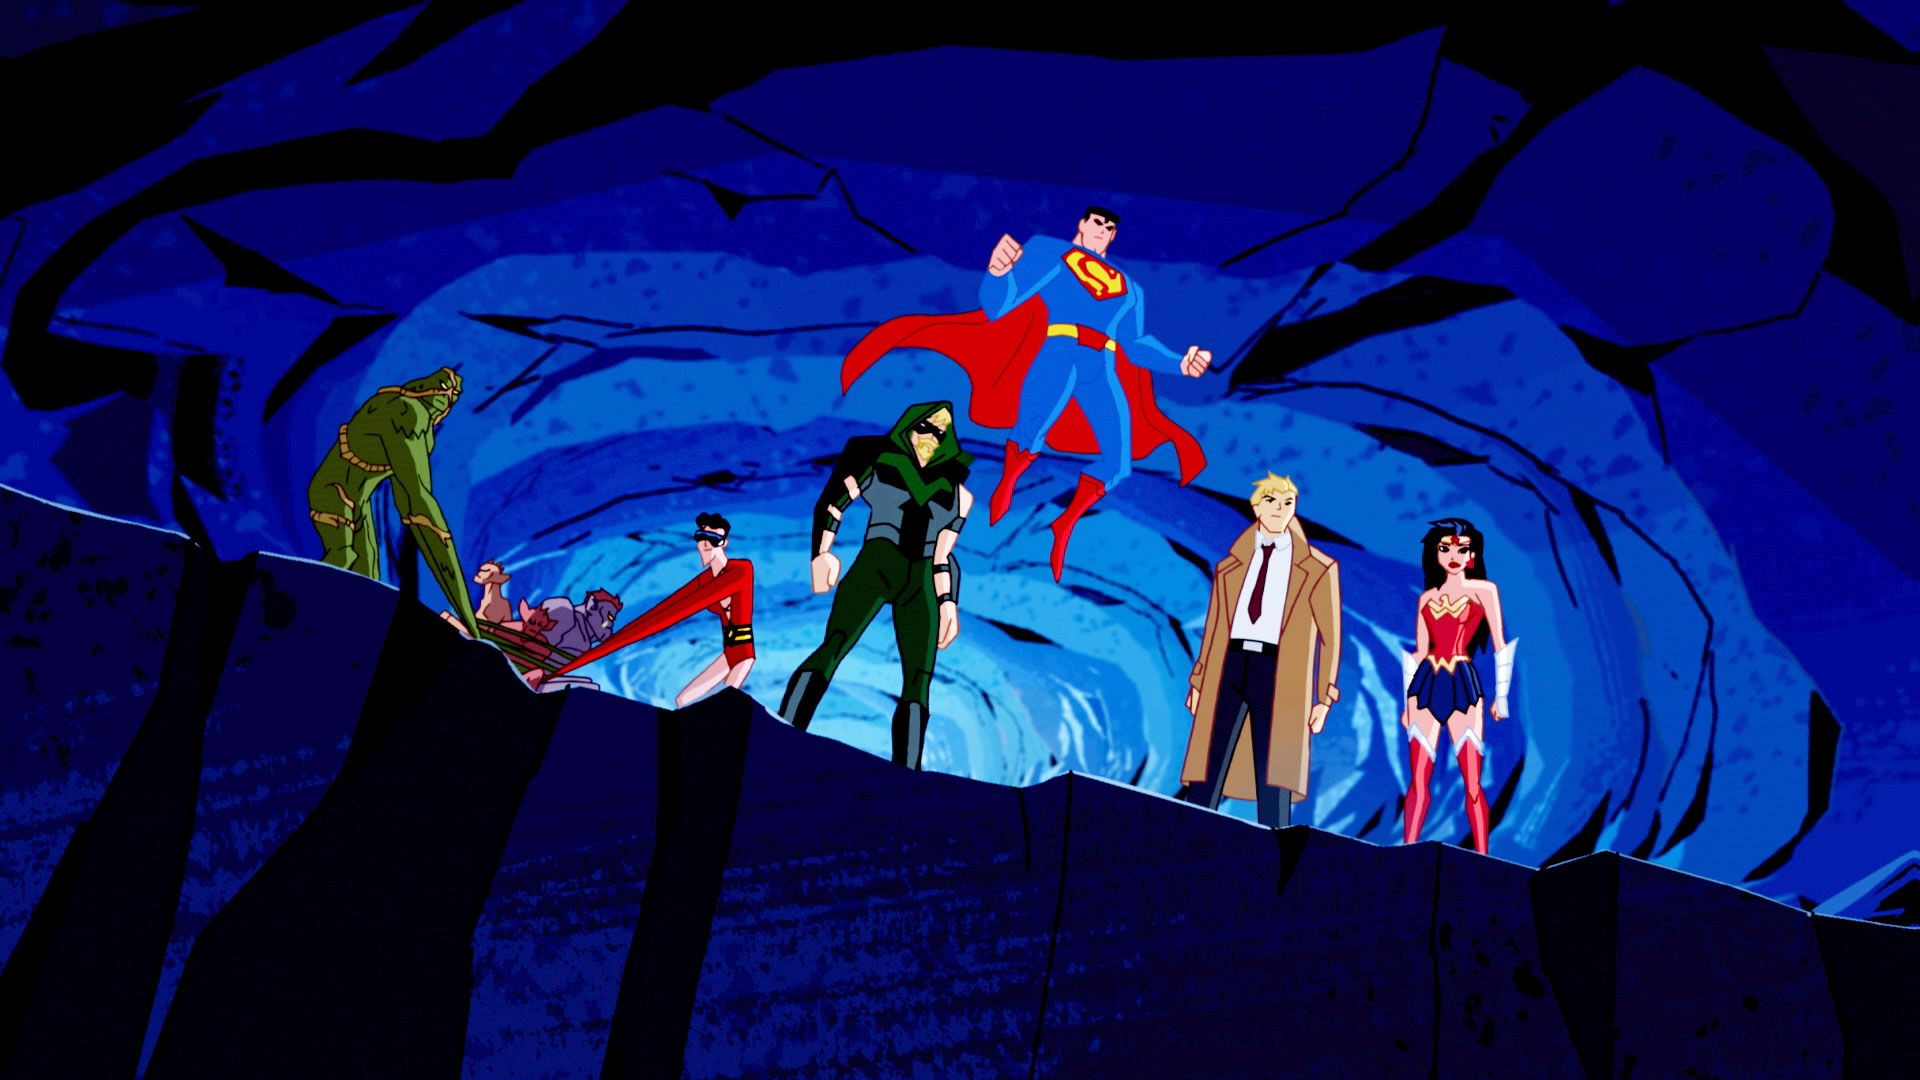 Justice League Action background